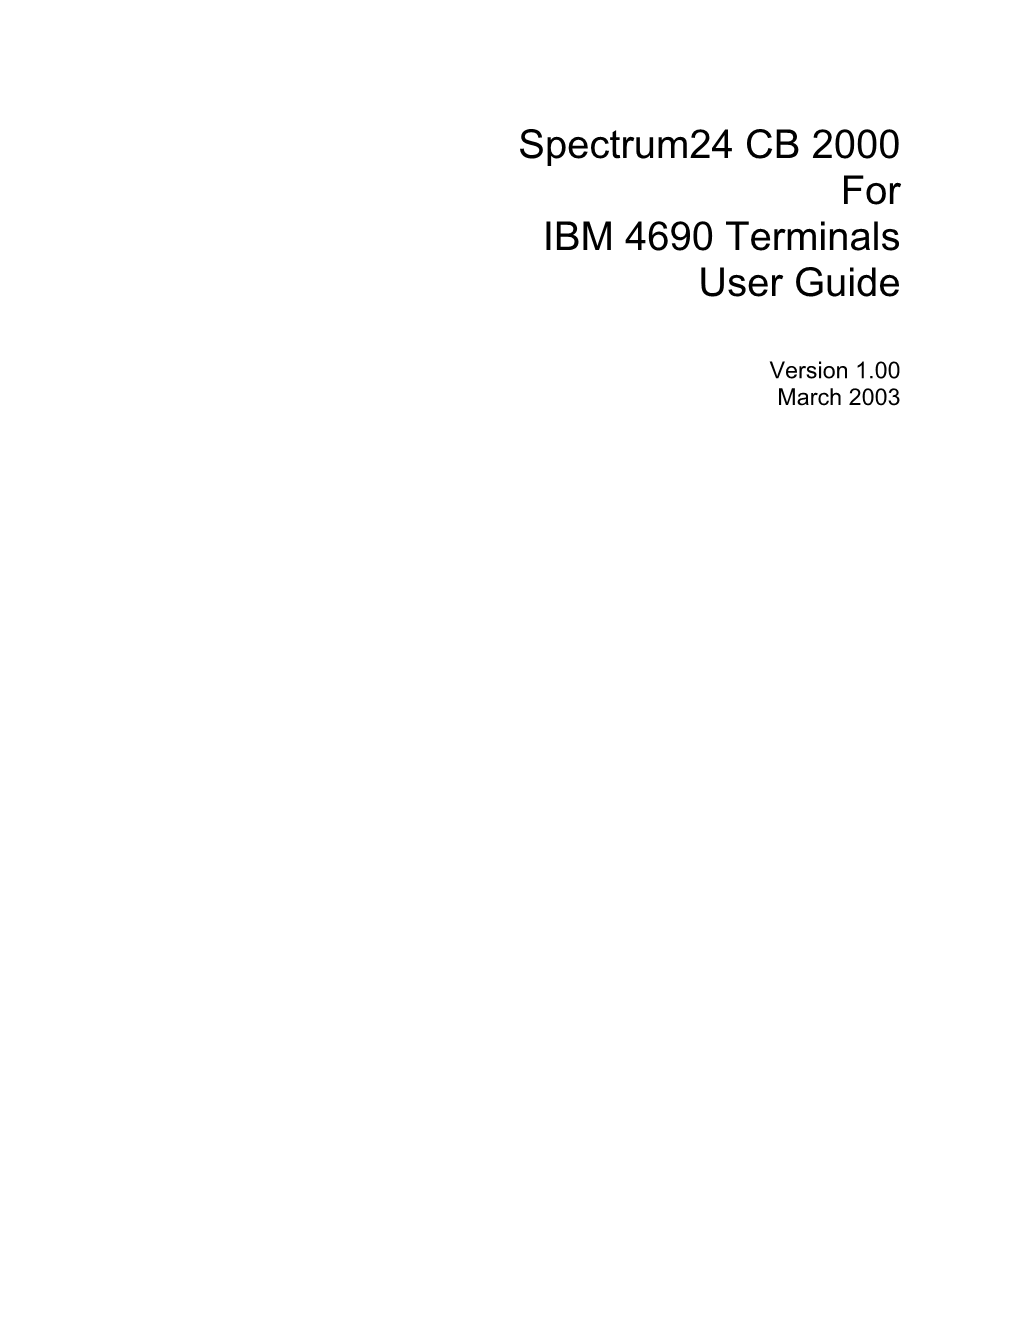 Spectrum24 CB 2000 for IBM 4690 Terminals User Guide